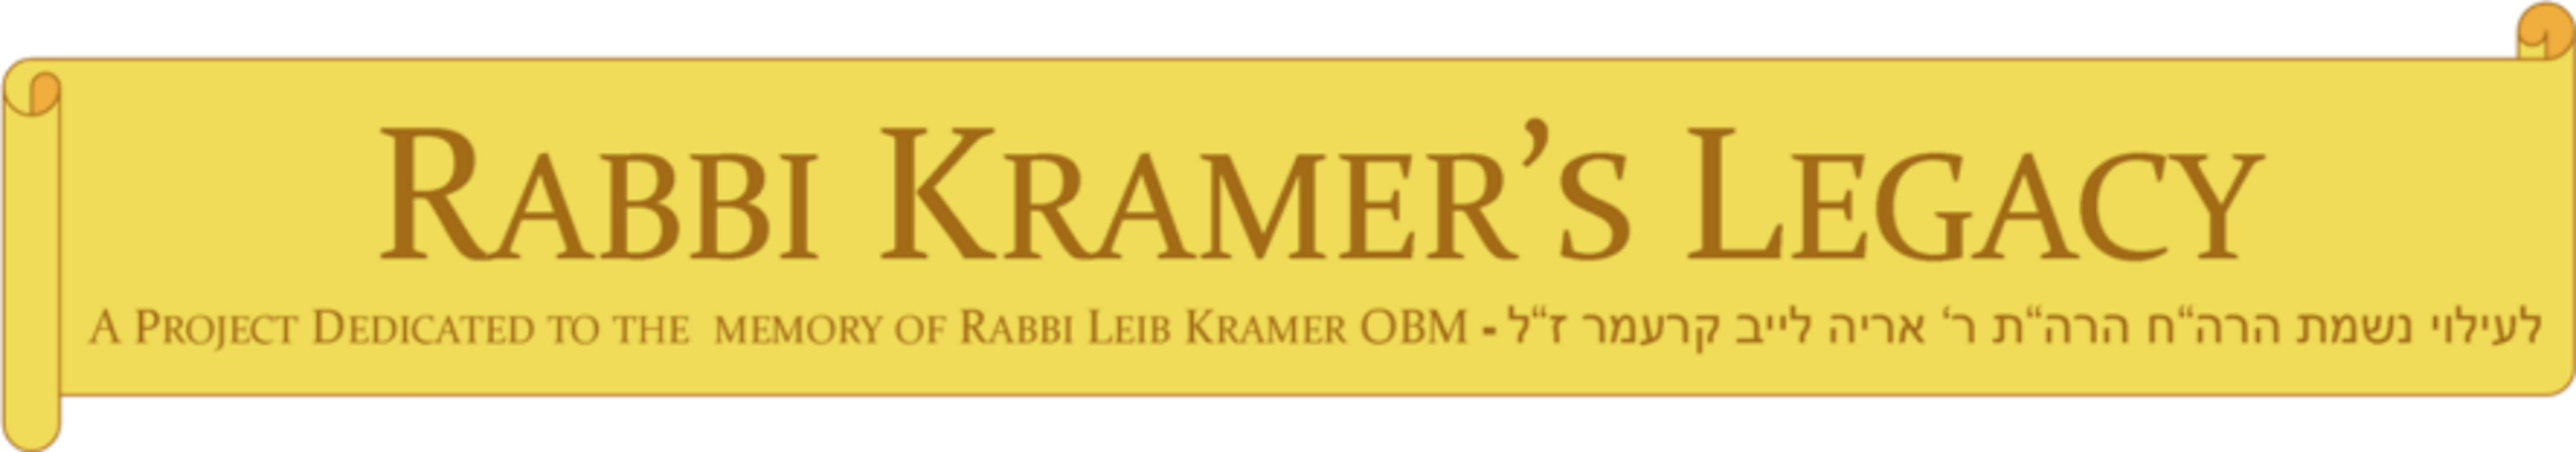 Rabbi Kramer's Legacy